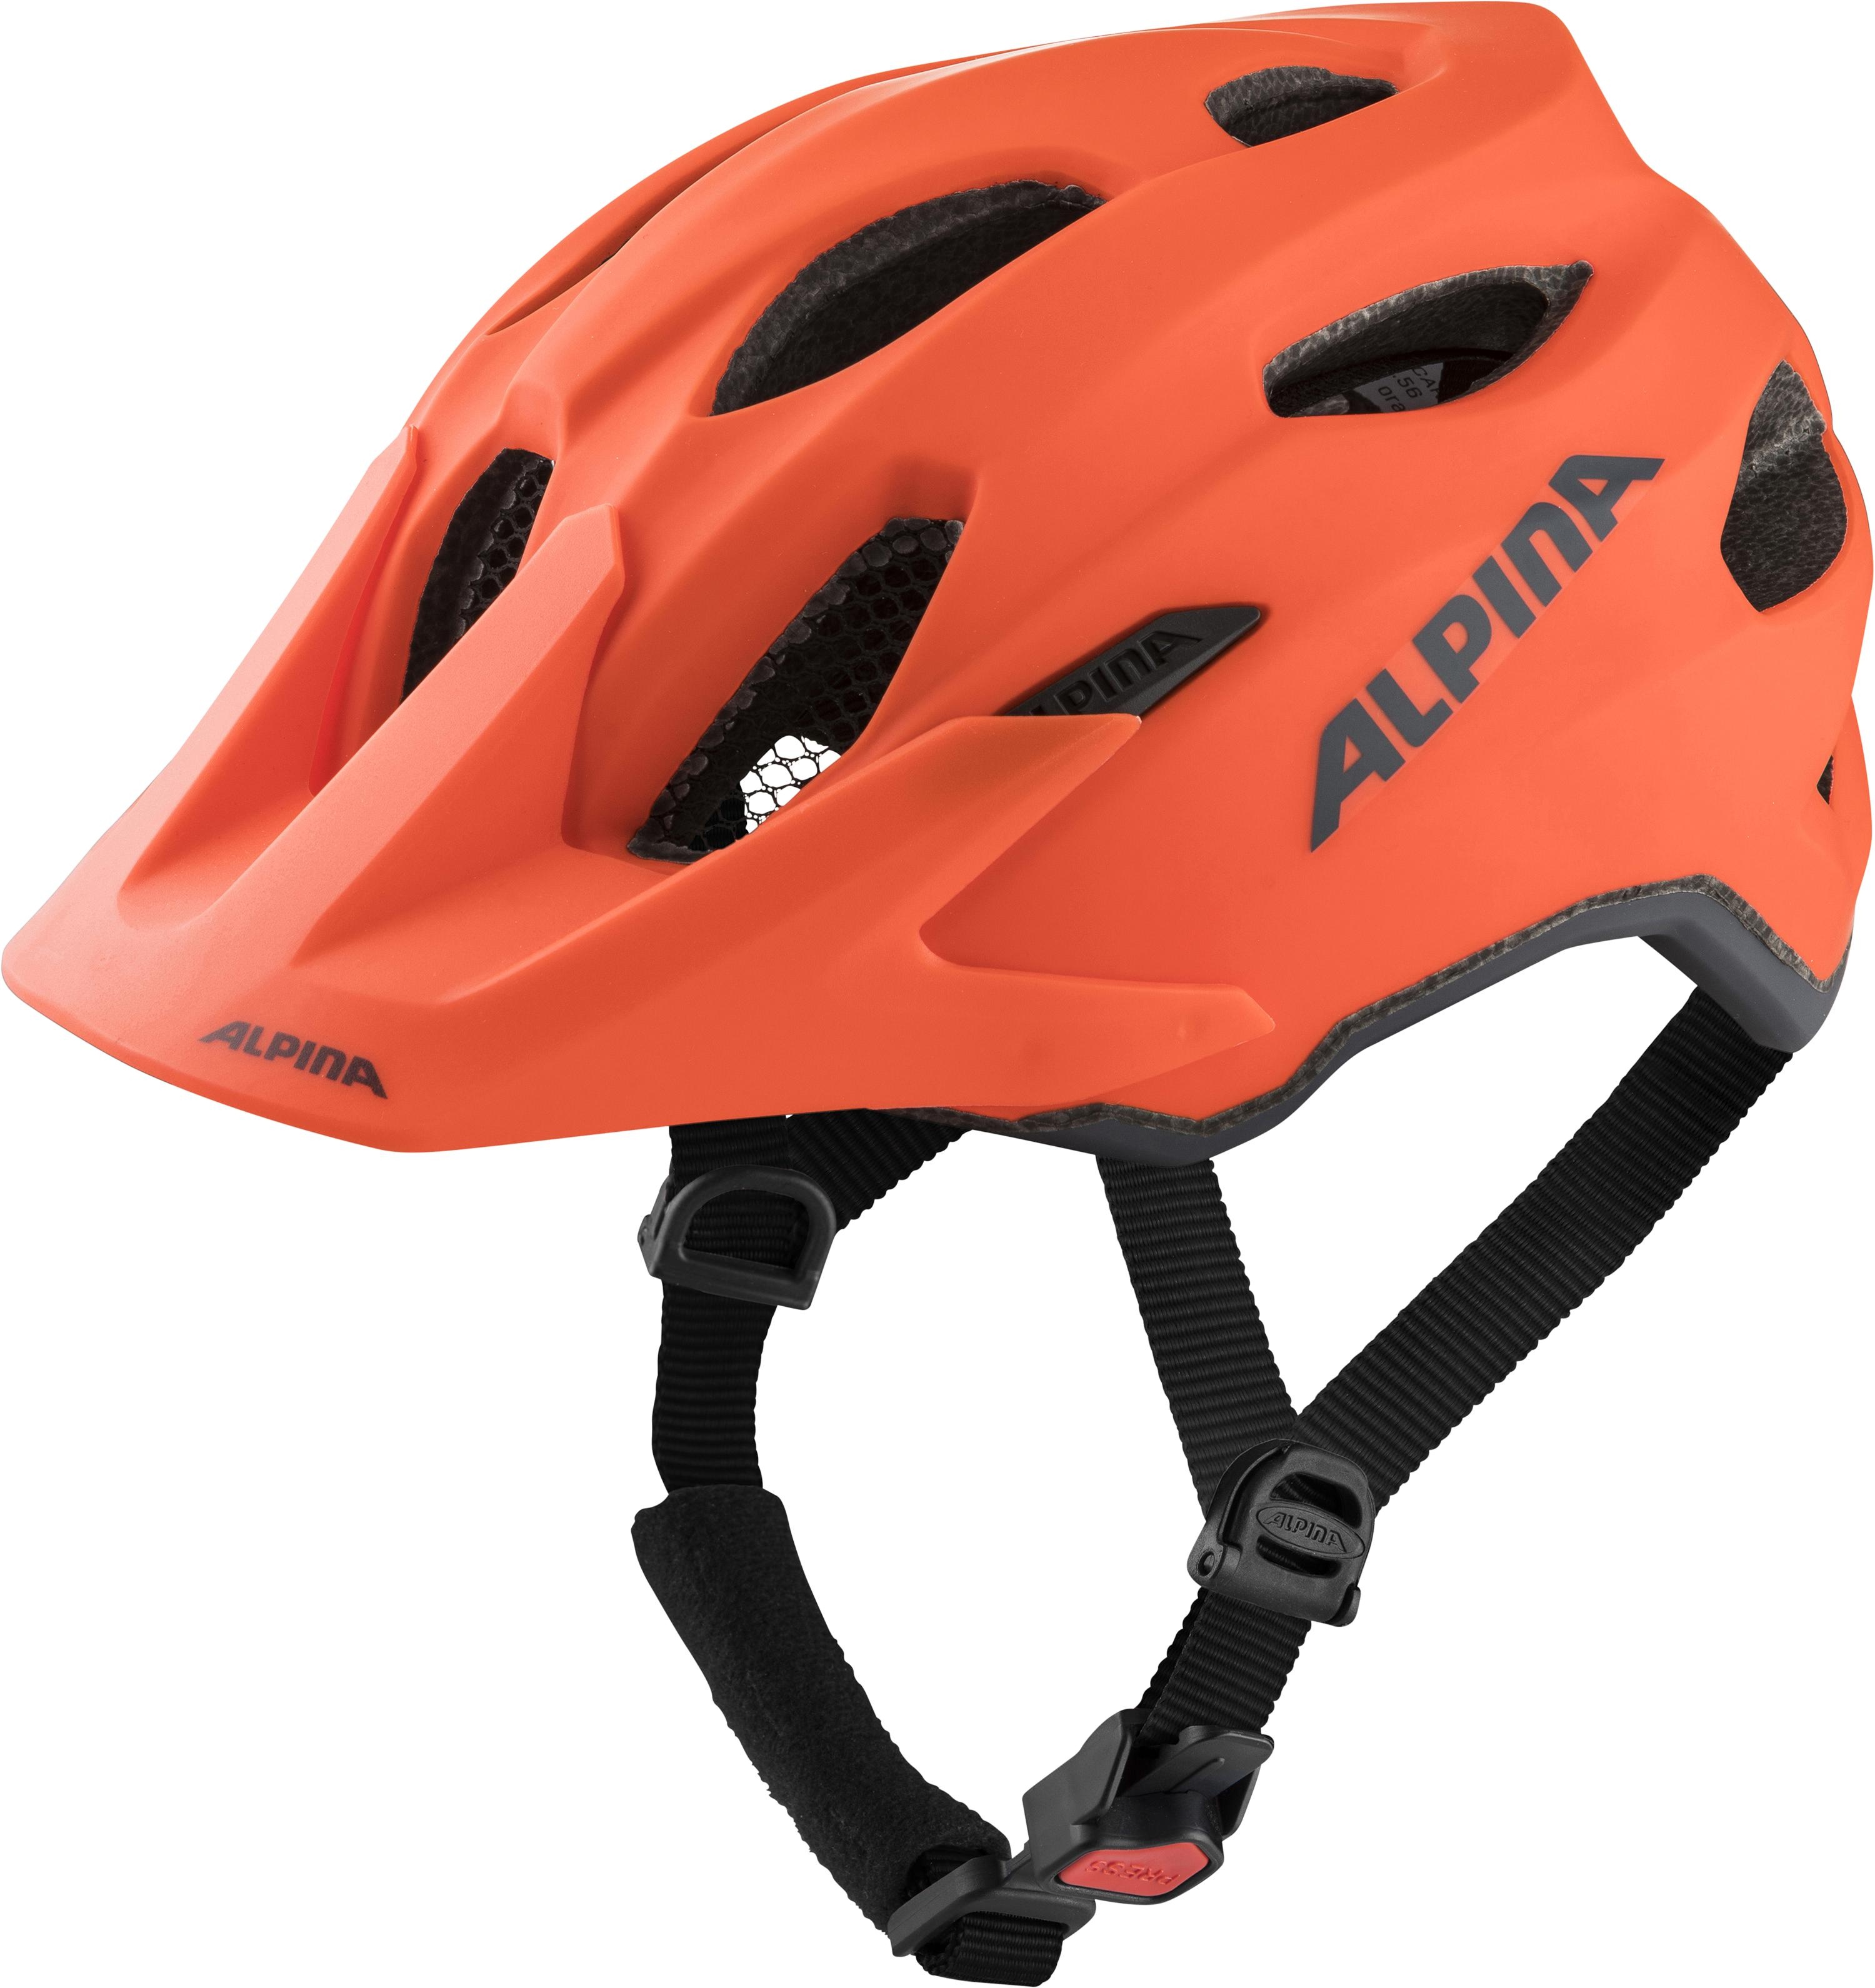 Alpina Carapax Jr. Kinder Fahrrad Helm 51-56cm | Orange matt